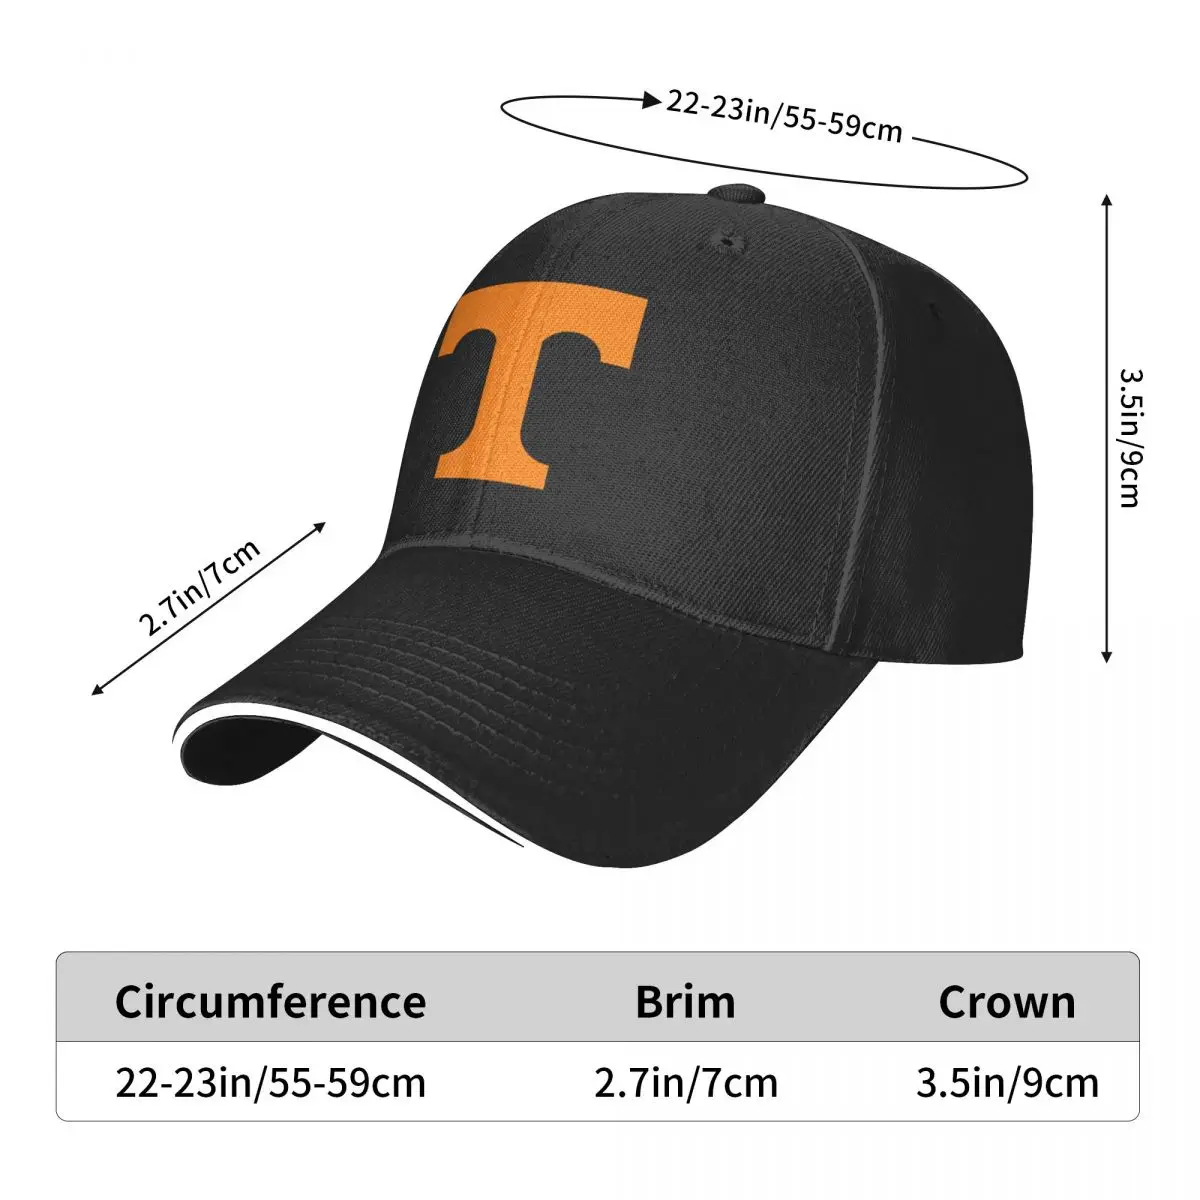 Unisex Cotton Cap For Women Men Tennessee Fashion Baseball Cap University Adjustable Outdoor Streetwear Hat